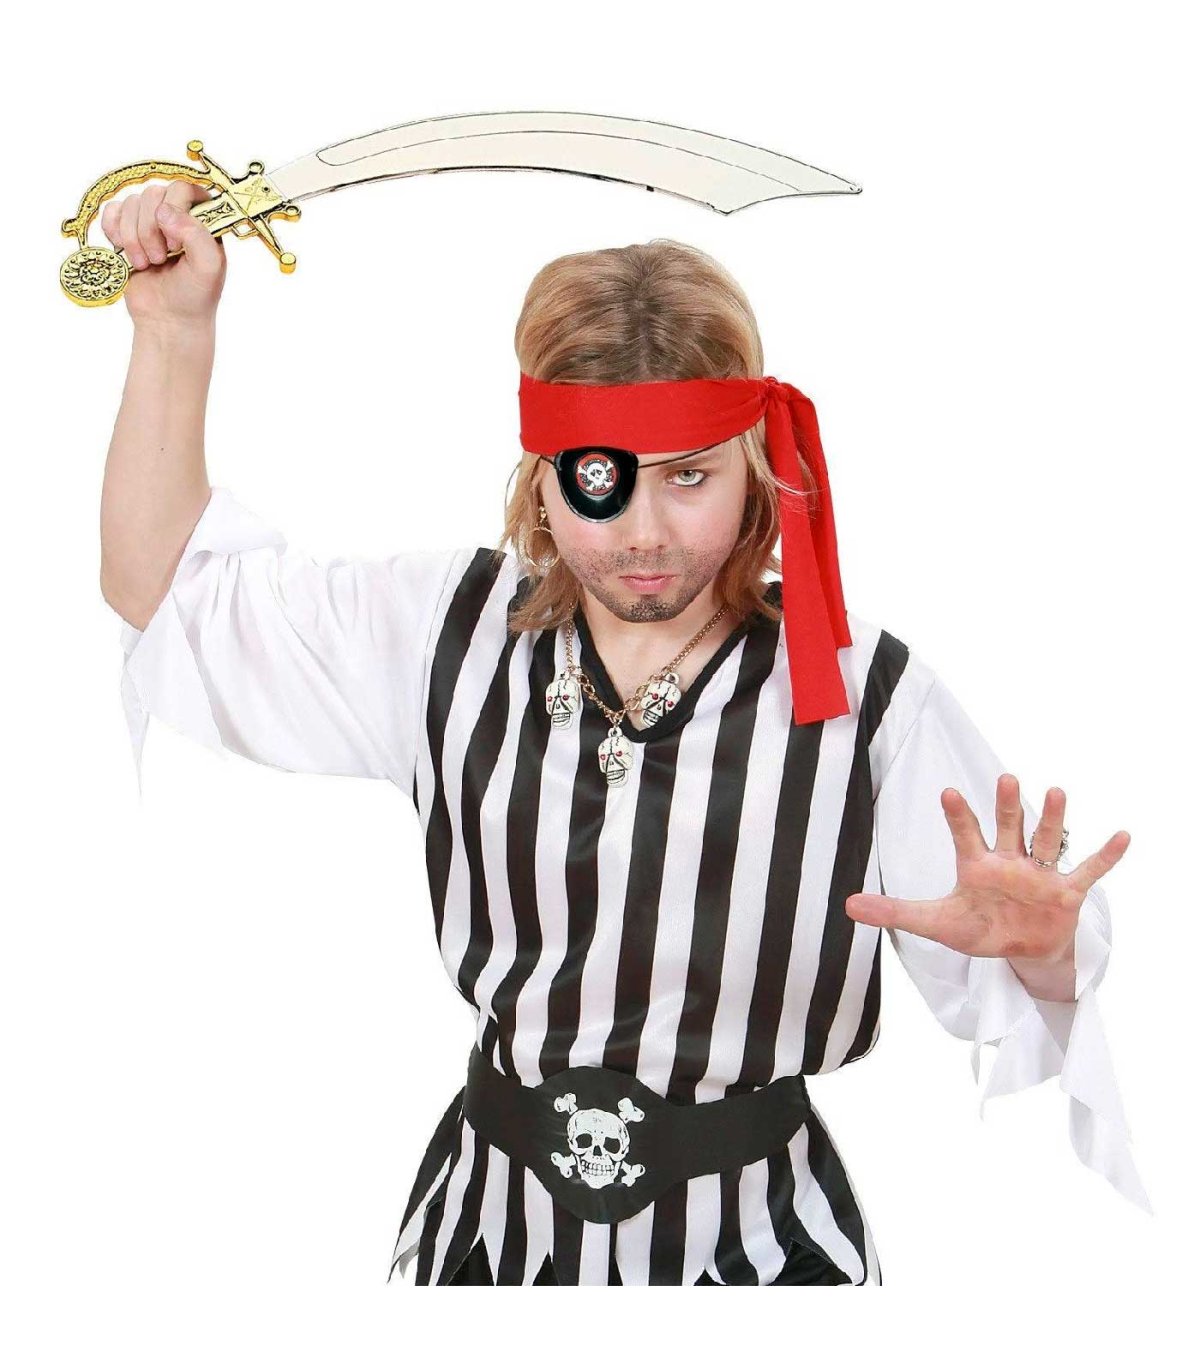 Tradineur - Espada pirata de espuma eva, sable de juguete para niños,  complemento de disfraz de corsario, carnaval, Halloween, c